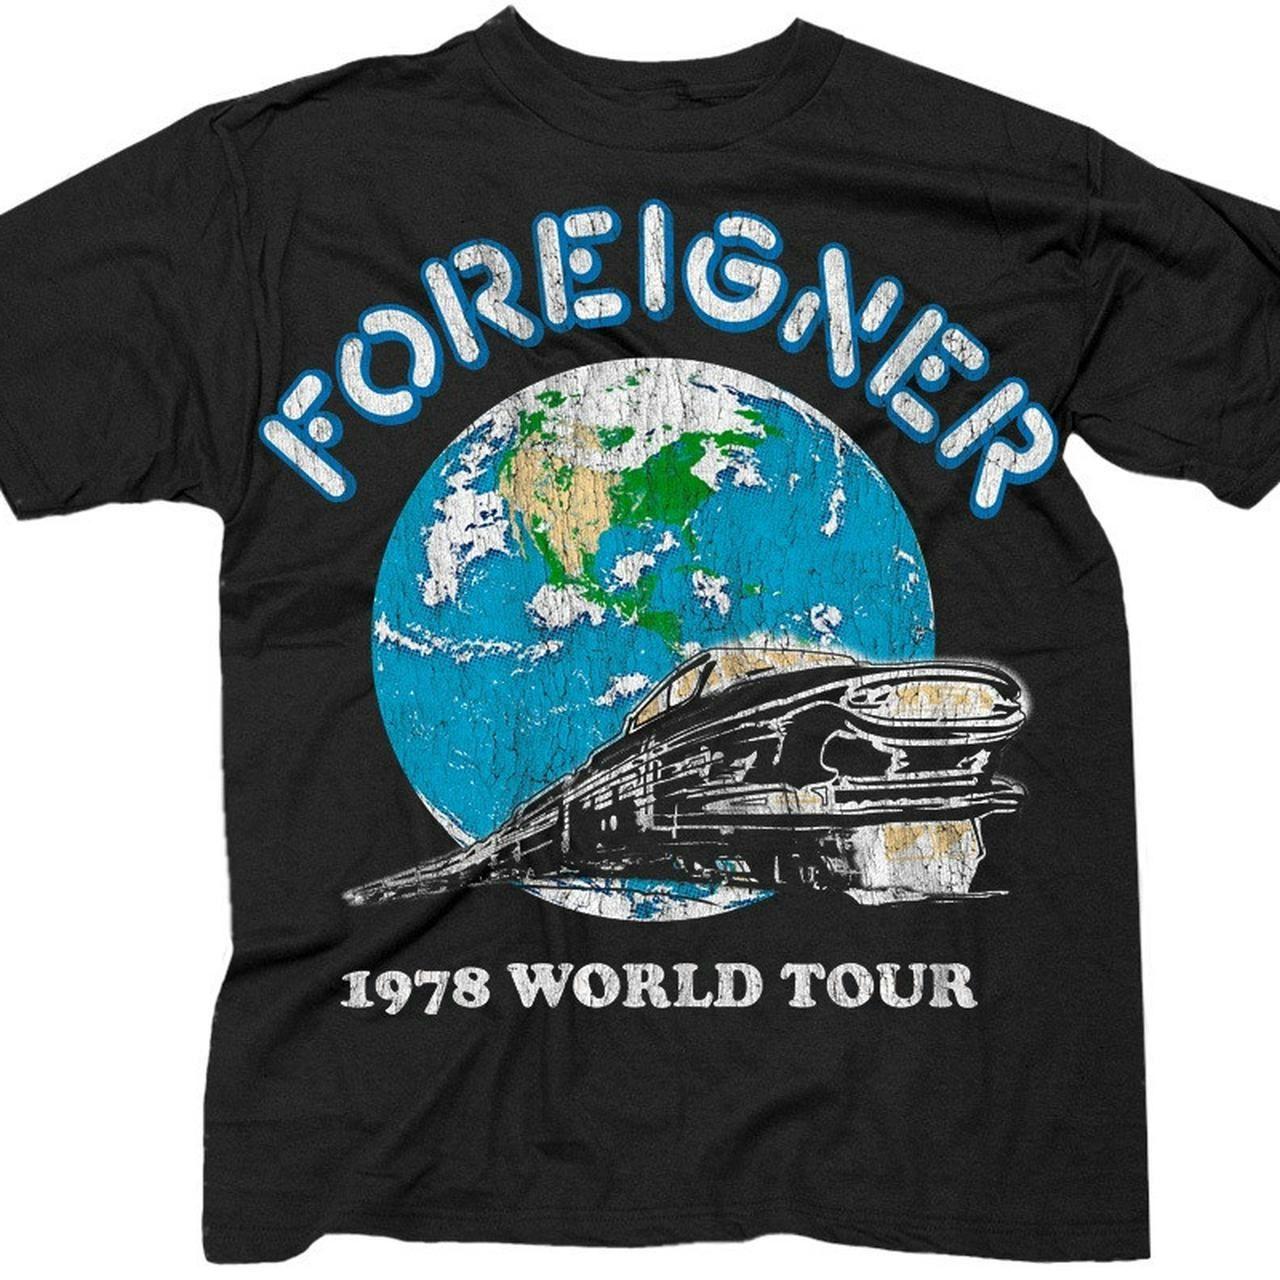 Foreigner "Tour" TShirt